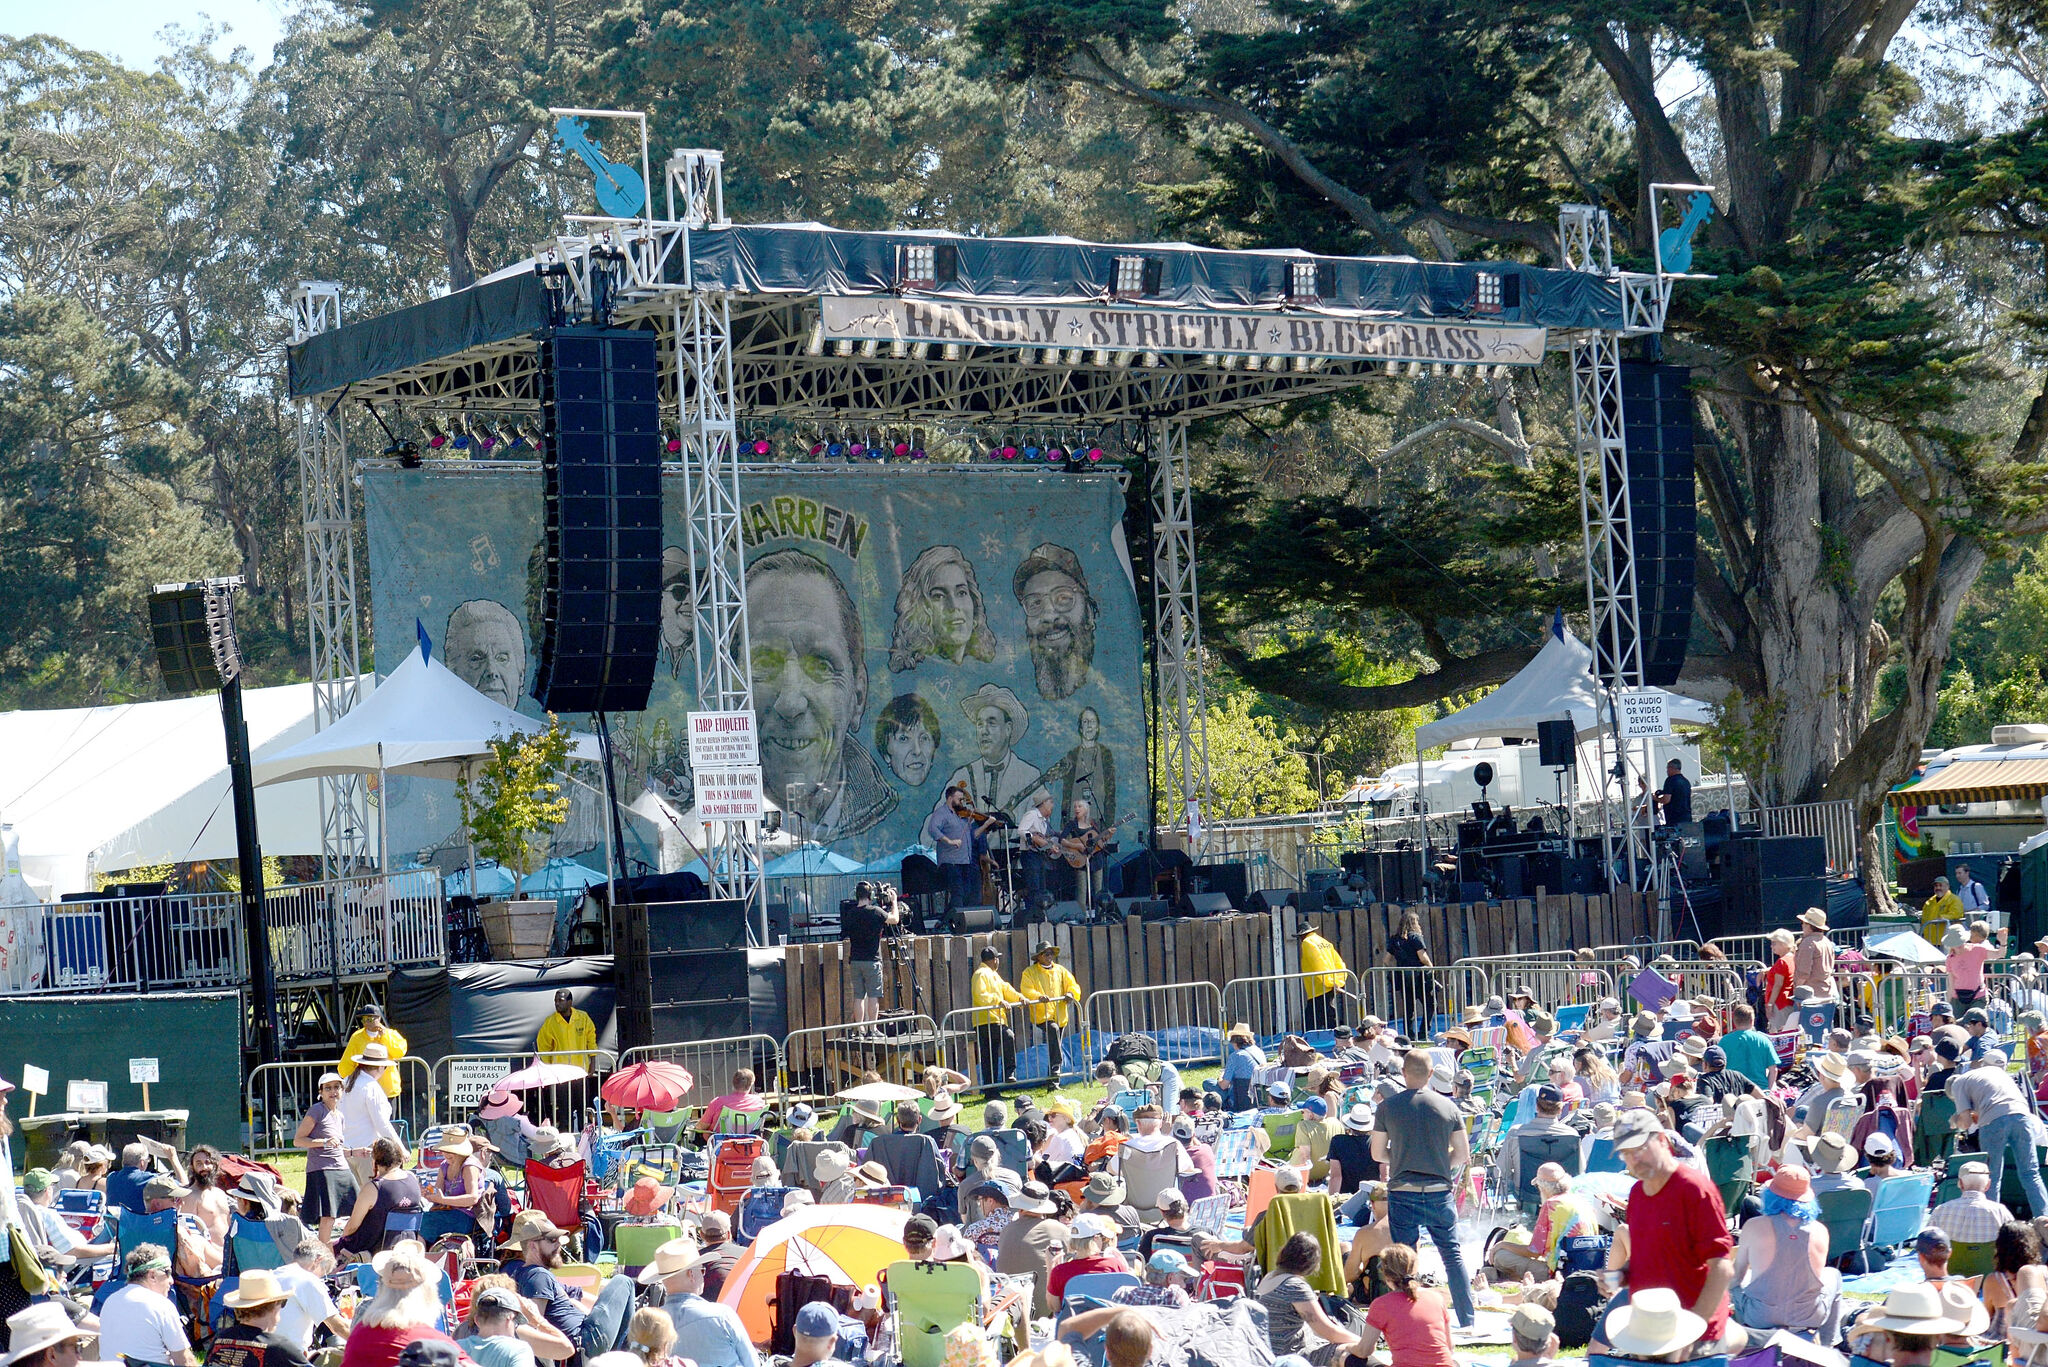 Hardly Strictly Bluegrass 2022 returns to Golden Gate Park